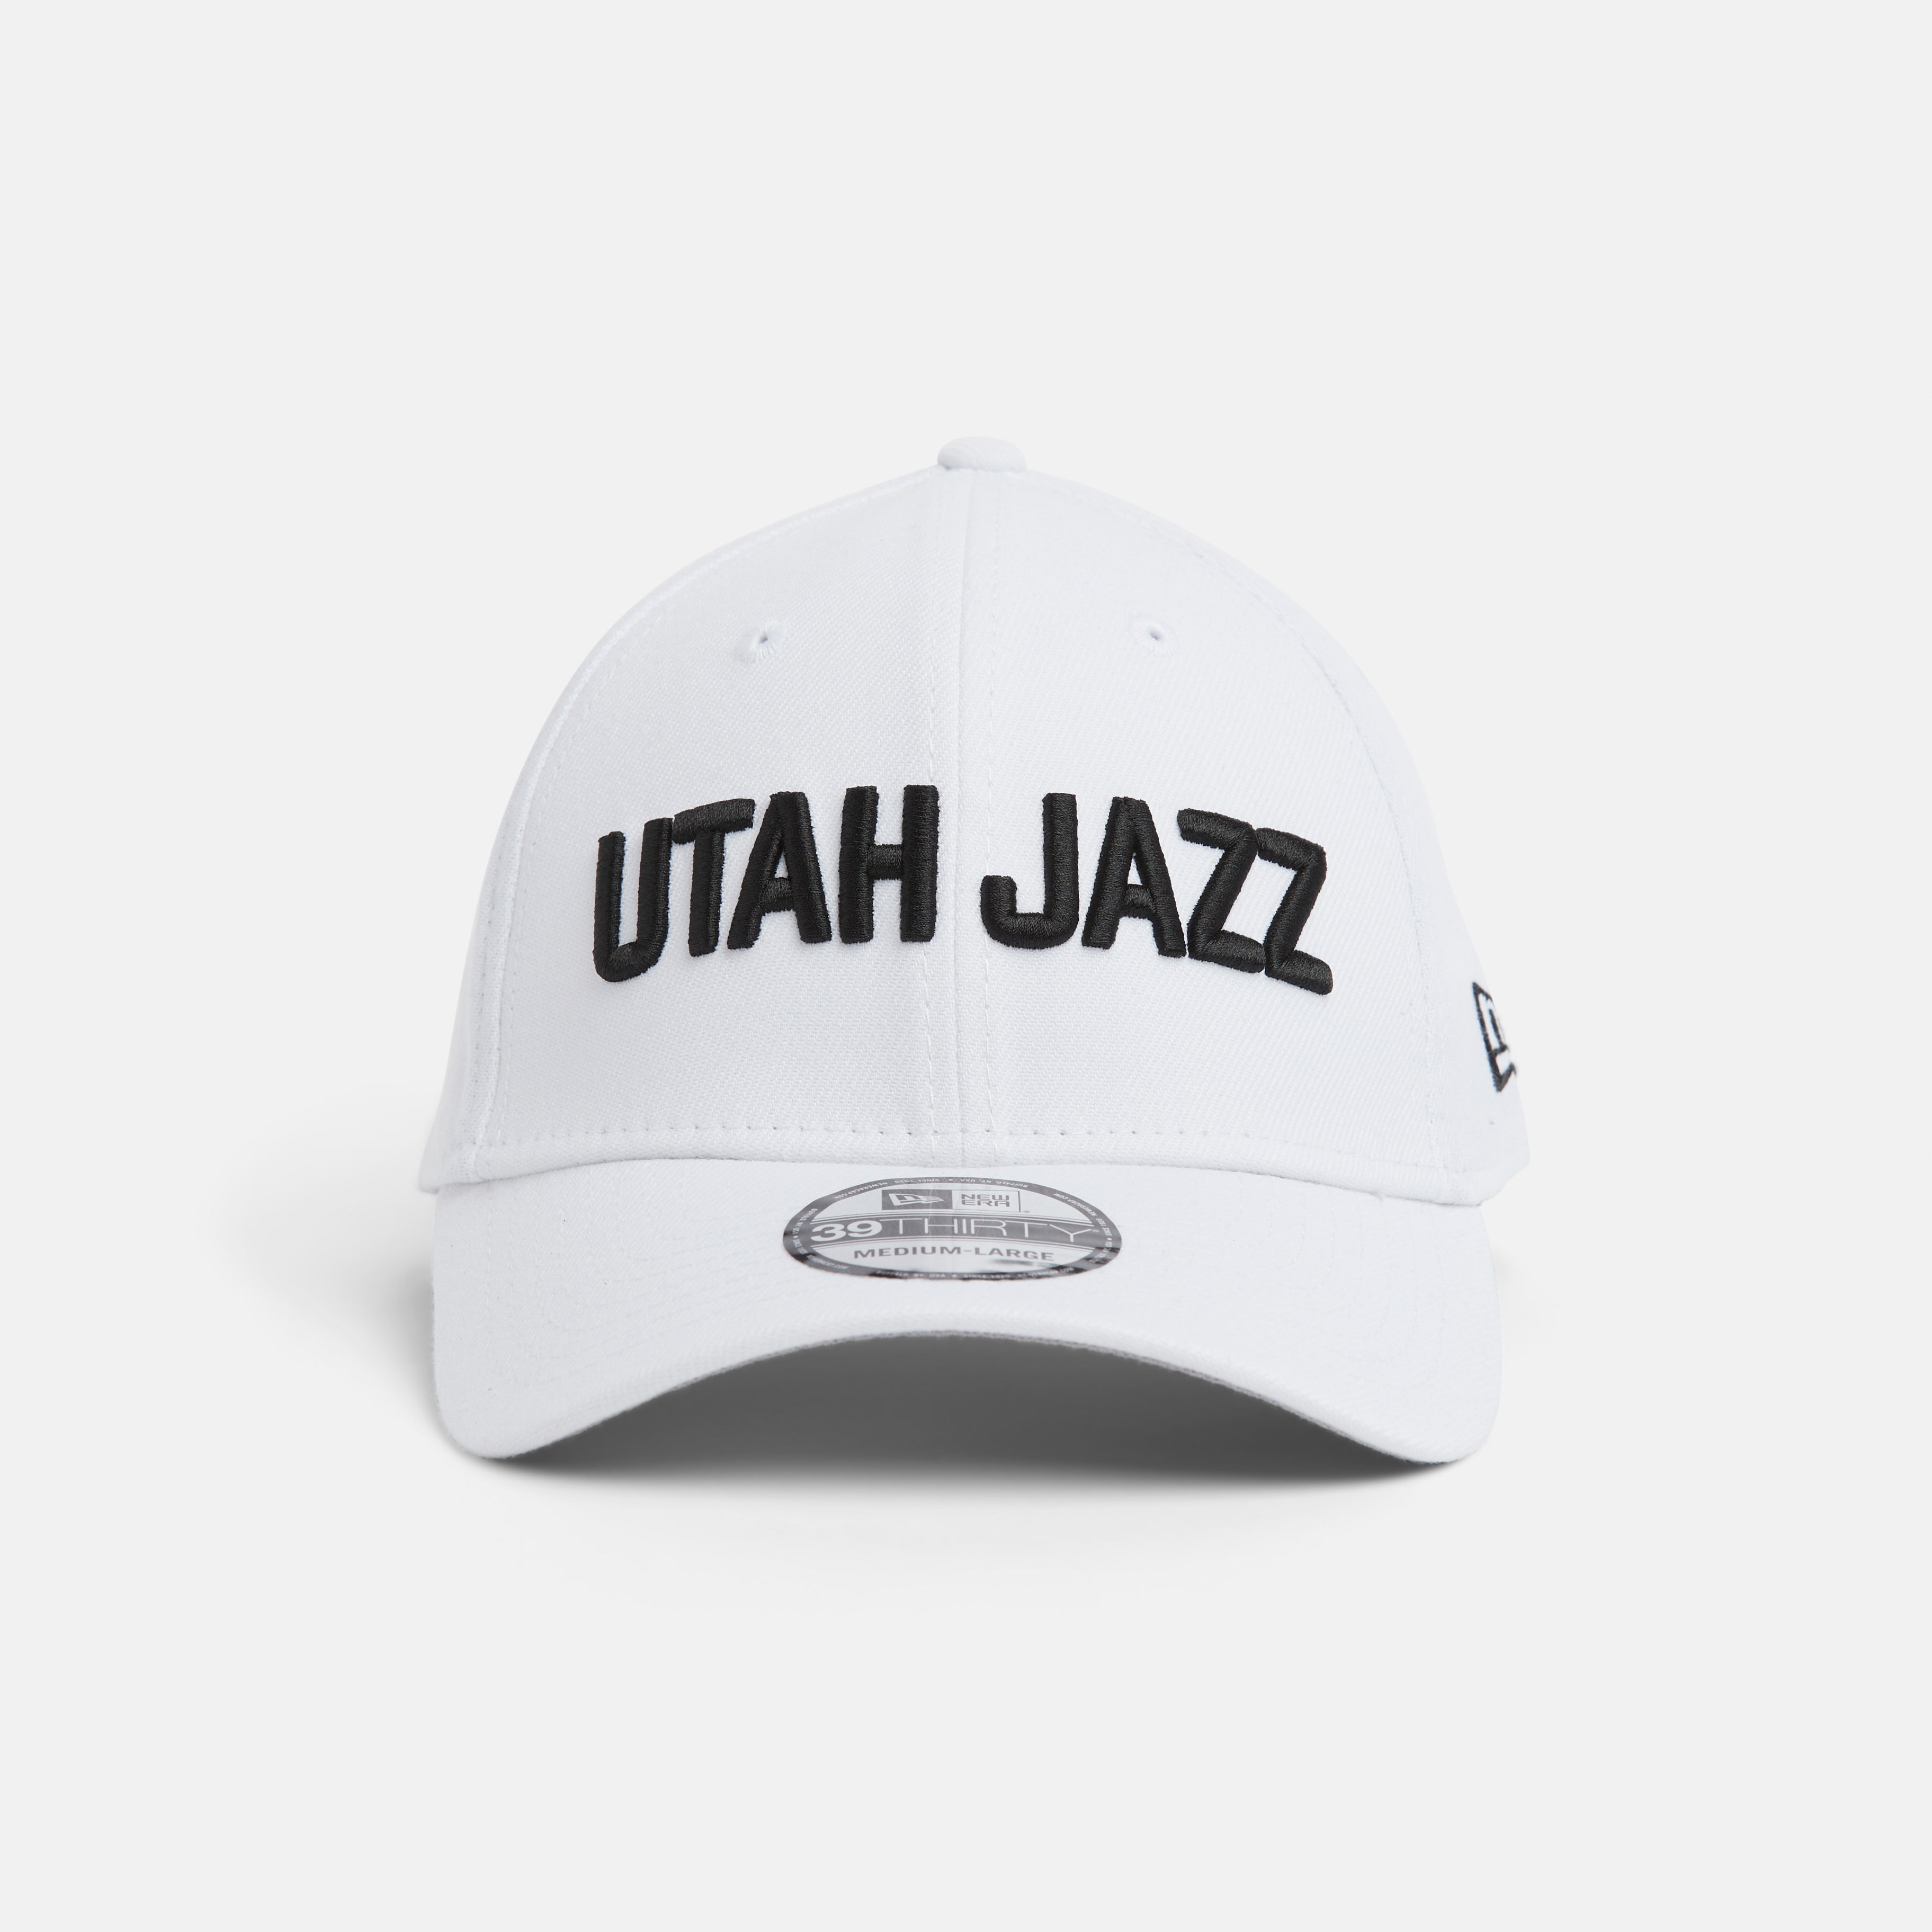 Front white 3930 with black  Utah Jazz wordmark logo.